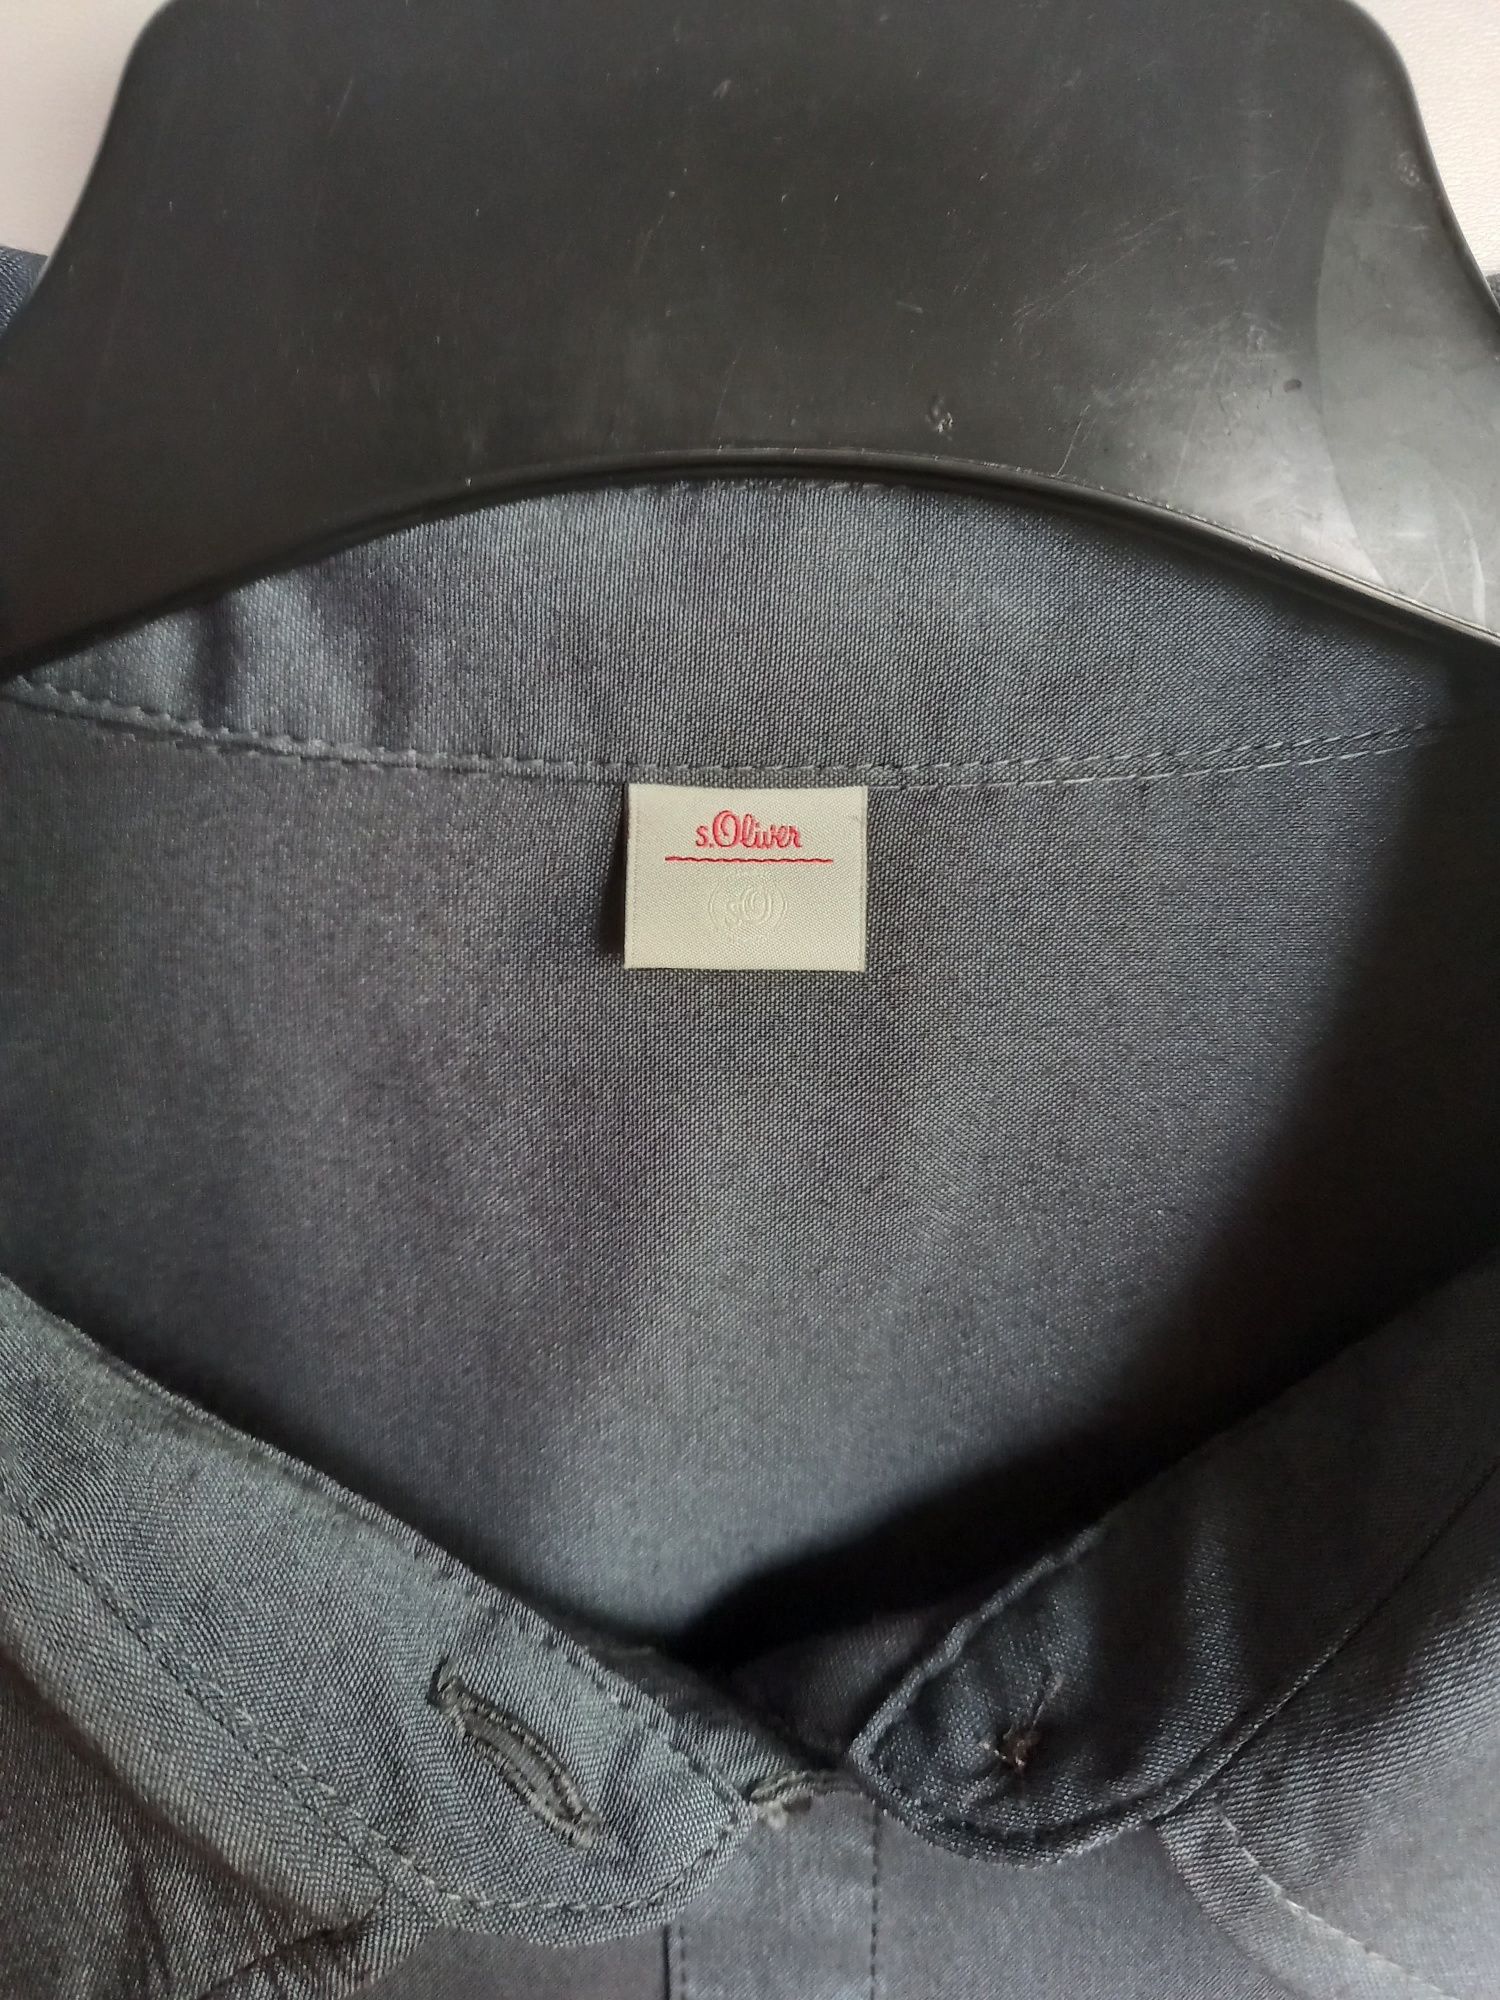 Женская рубашка шелк/хлопок, бренд